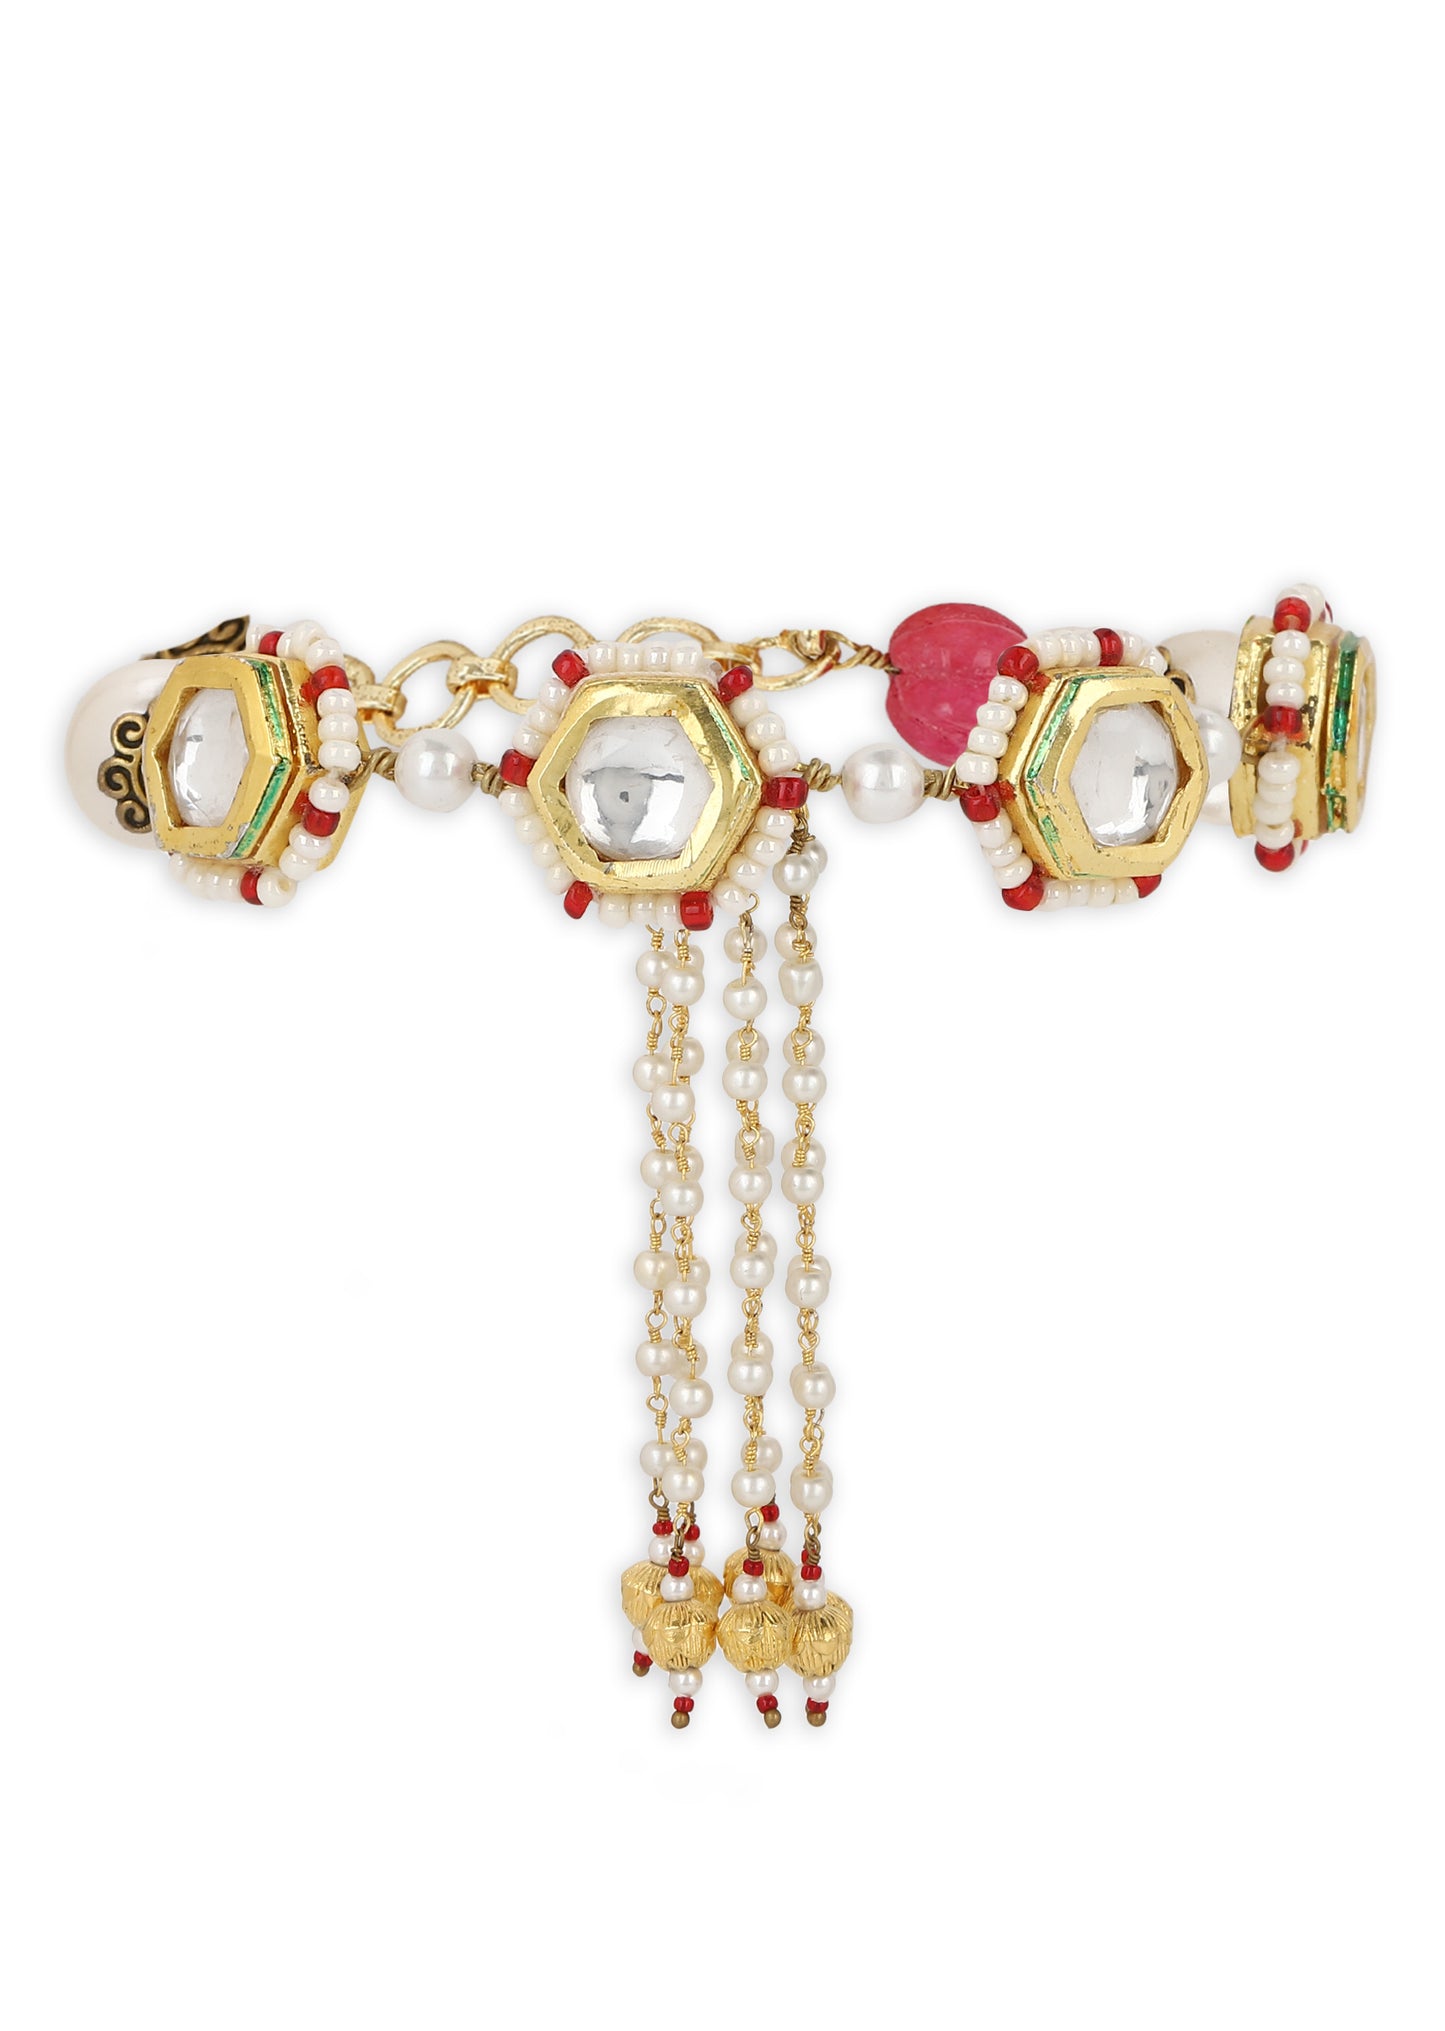 Kubera Bracelet Red at Kamakhyaa by House Of Heer. This item is Alloy Metal, Bracelets, Festive Wear, Free Size, jewelry, Natural, Polkis, rakhis & lumbas, Textured, White